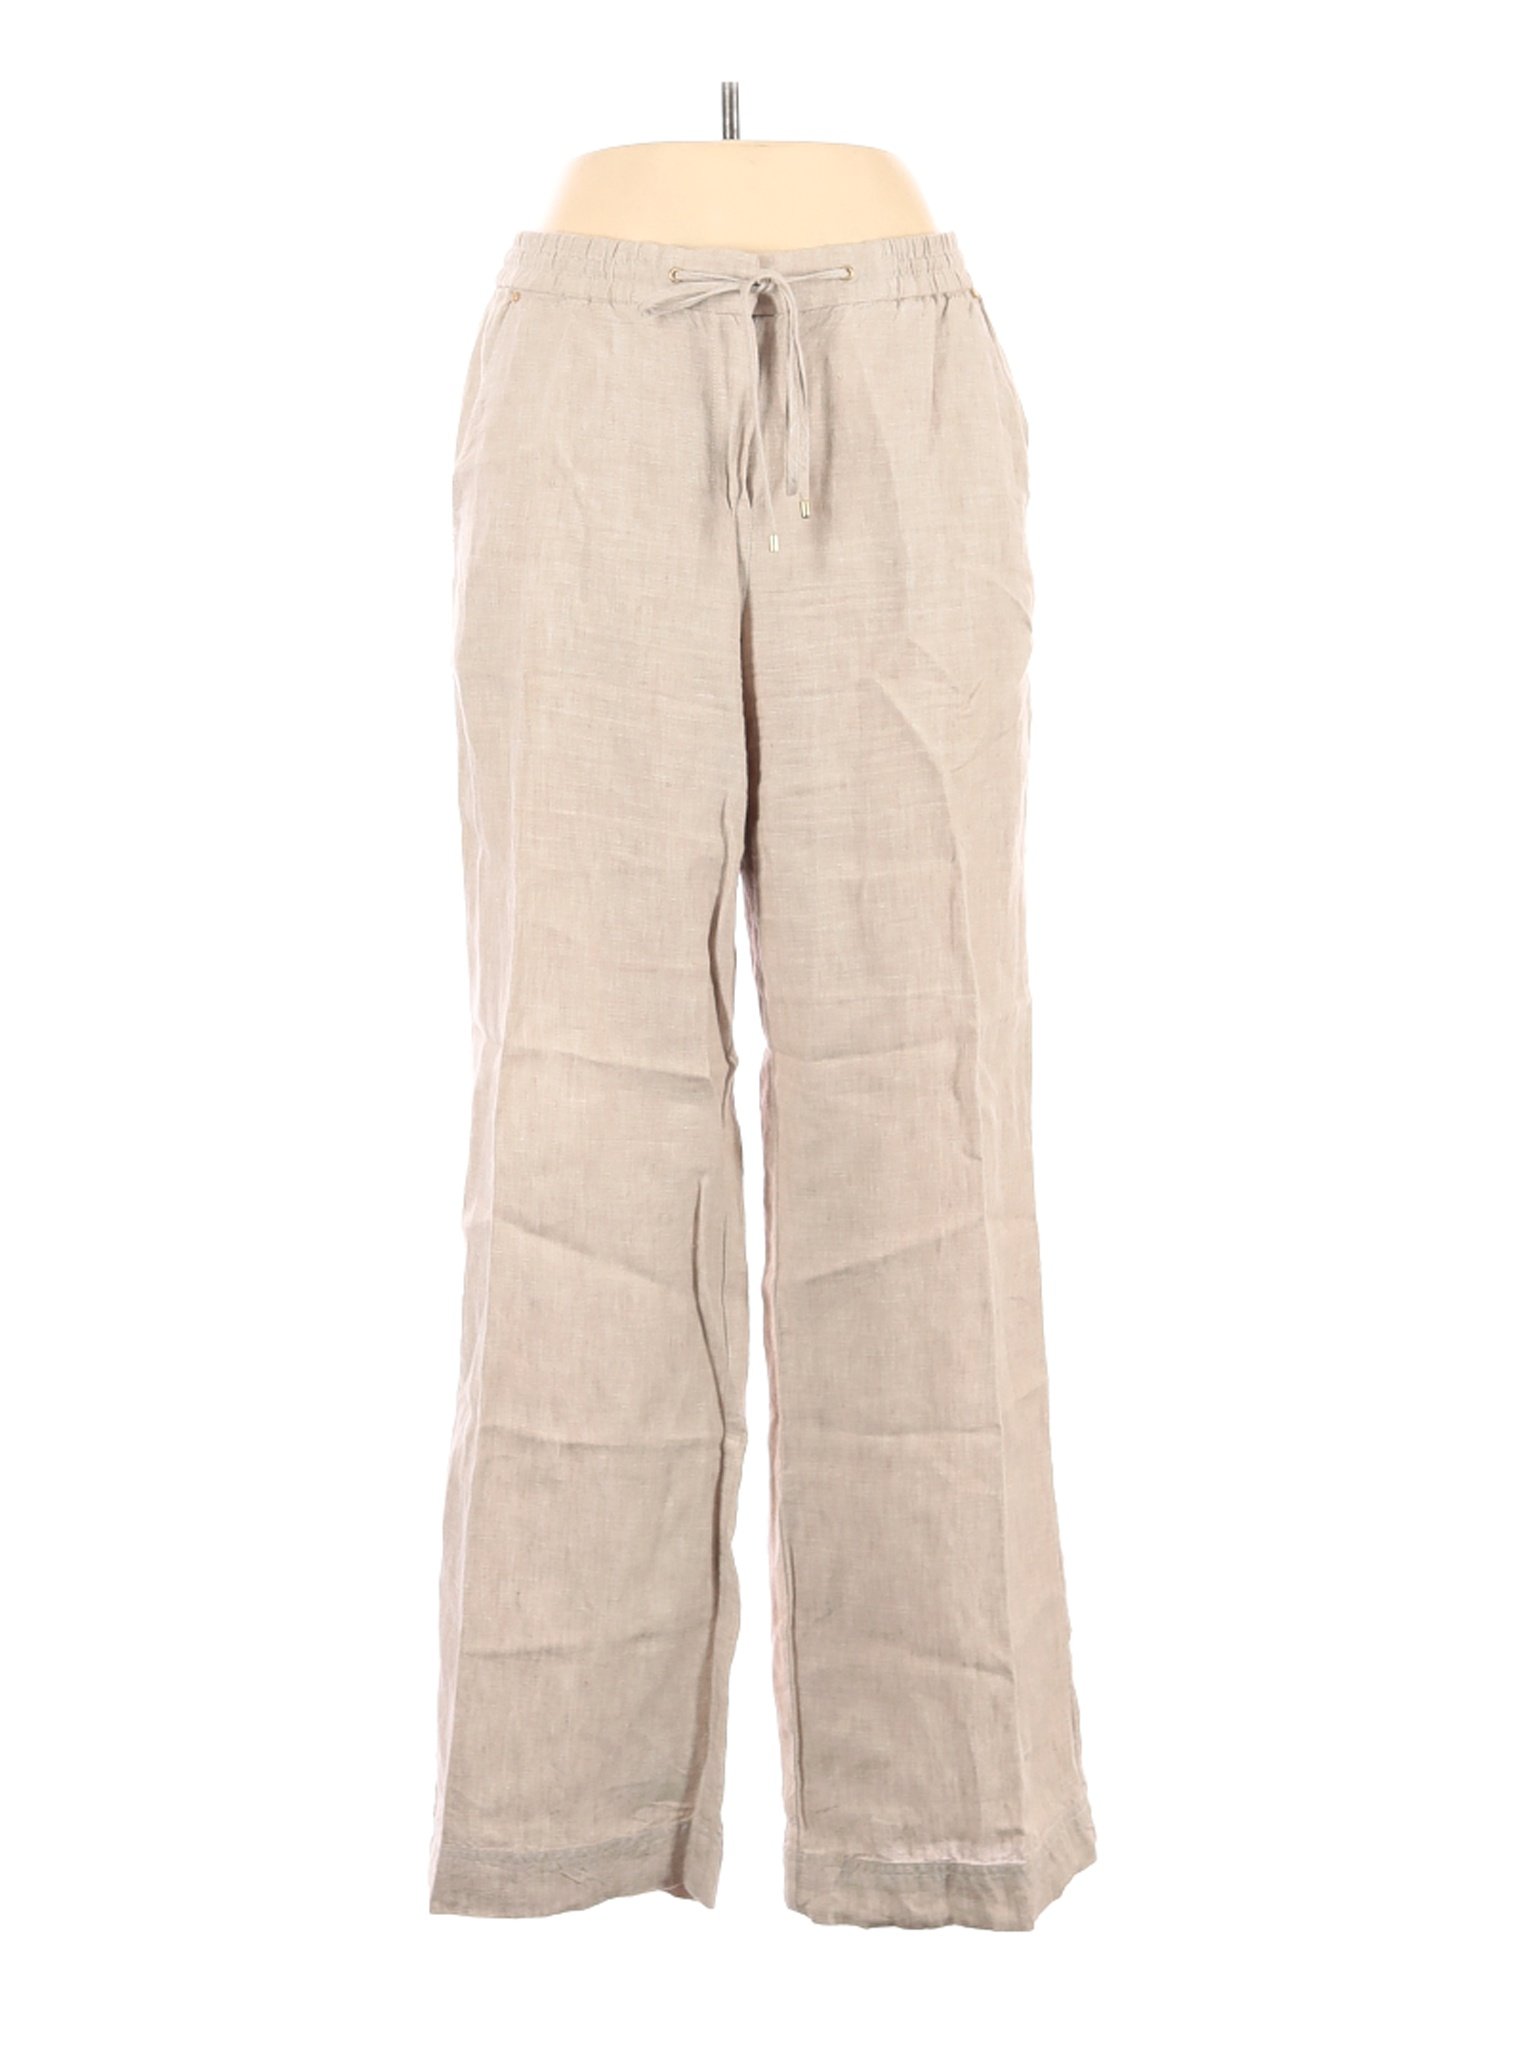 Jones New York Women Ivory Linen Pants 10 | eBay